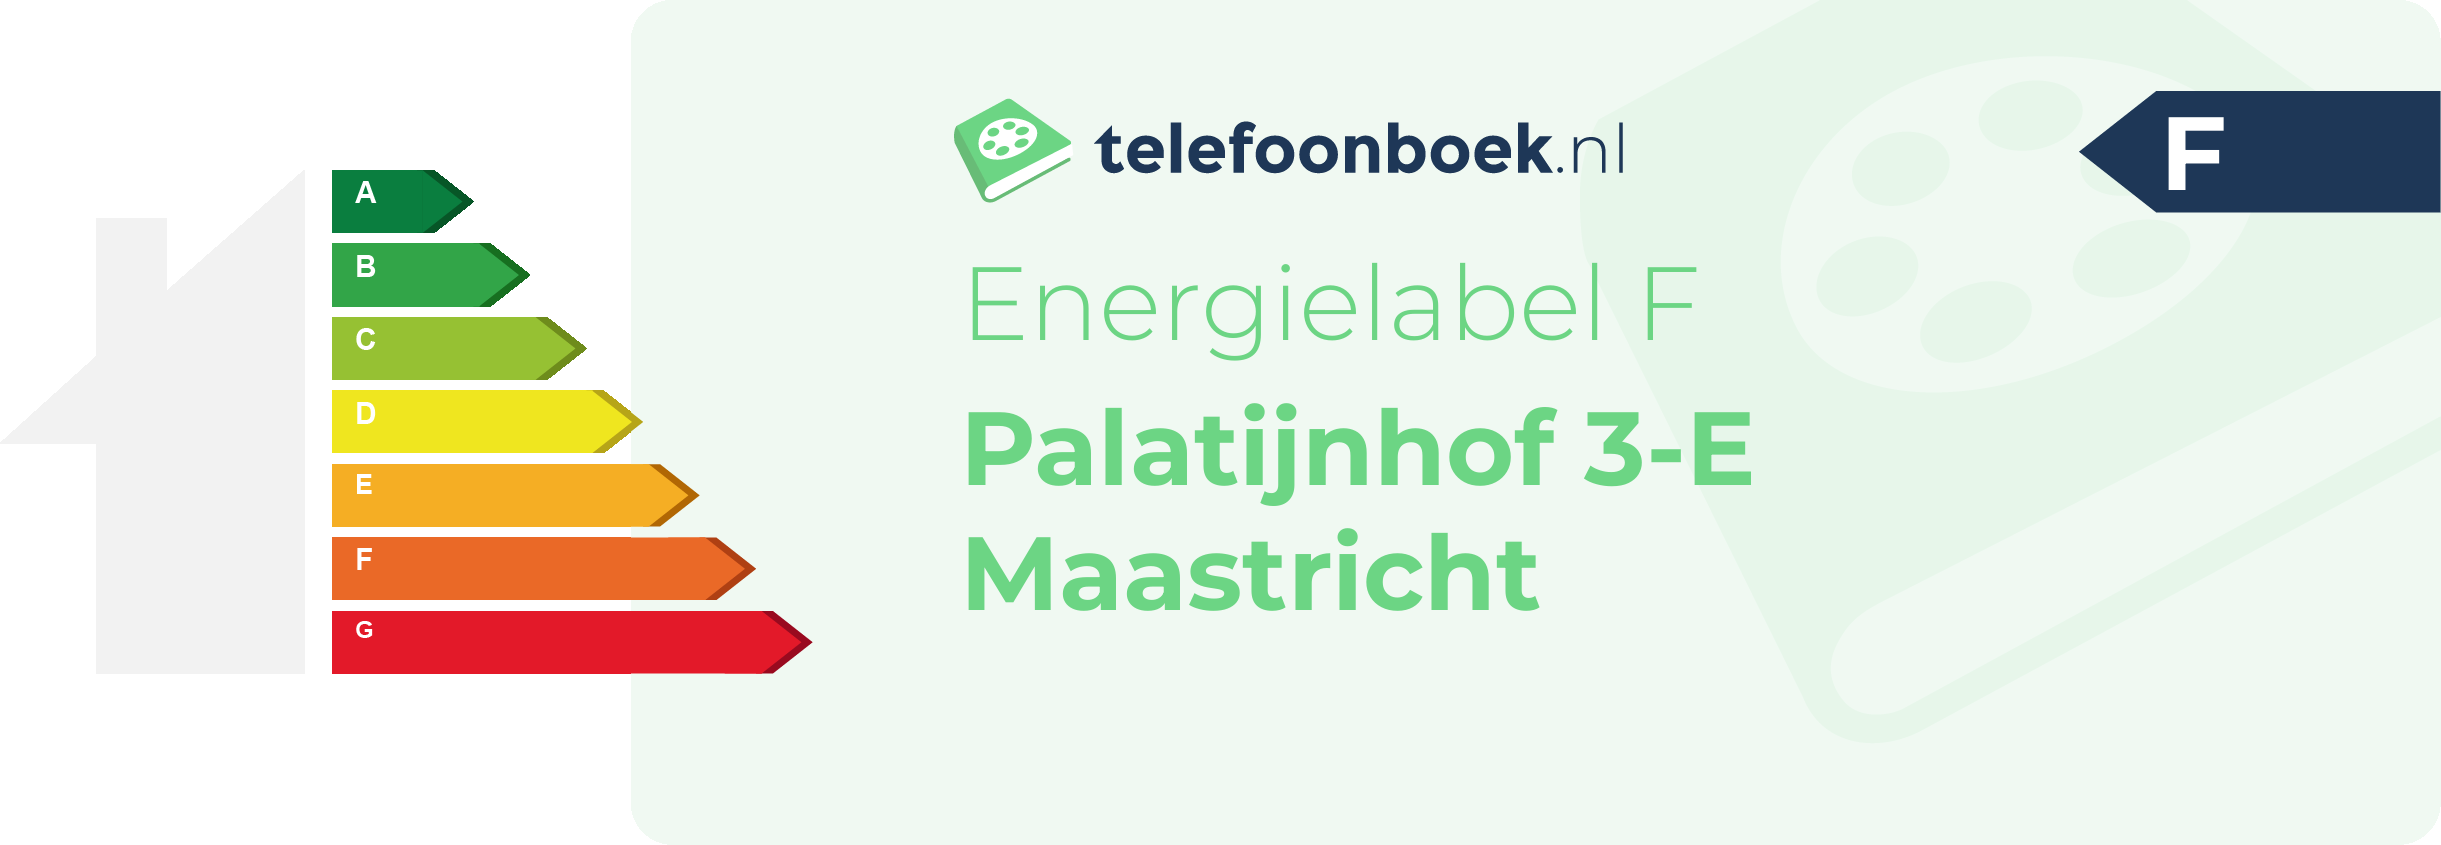 Energielabel Palatijnhof 3-E Maastricht